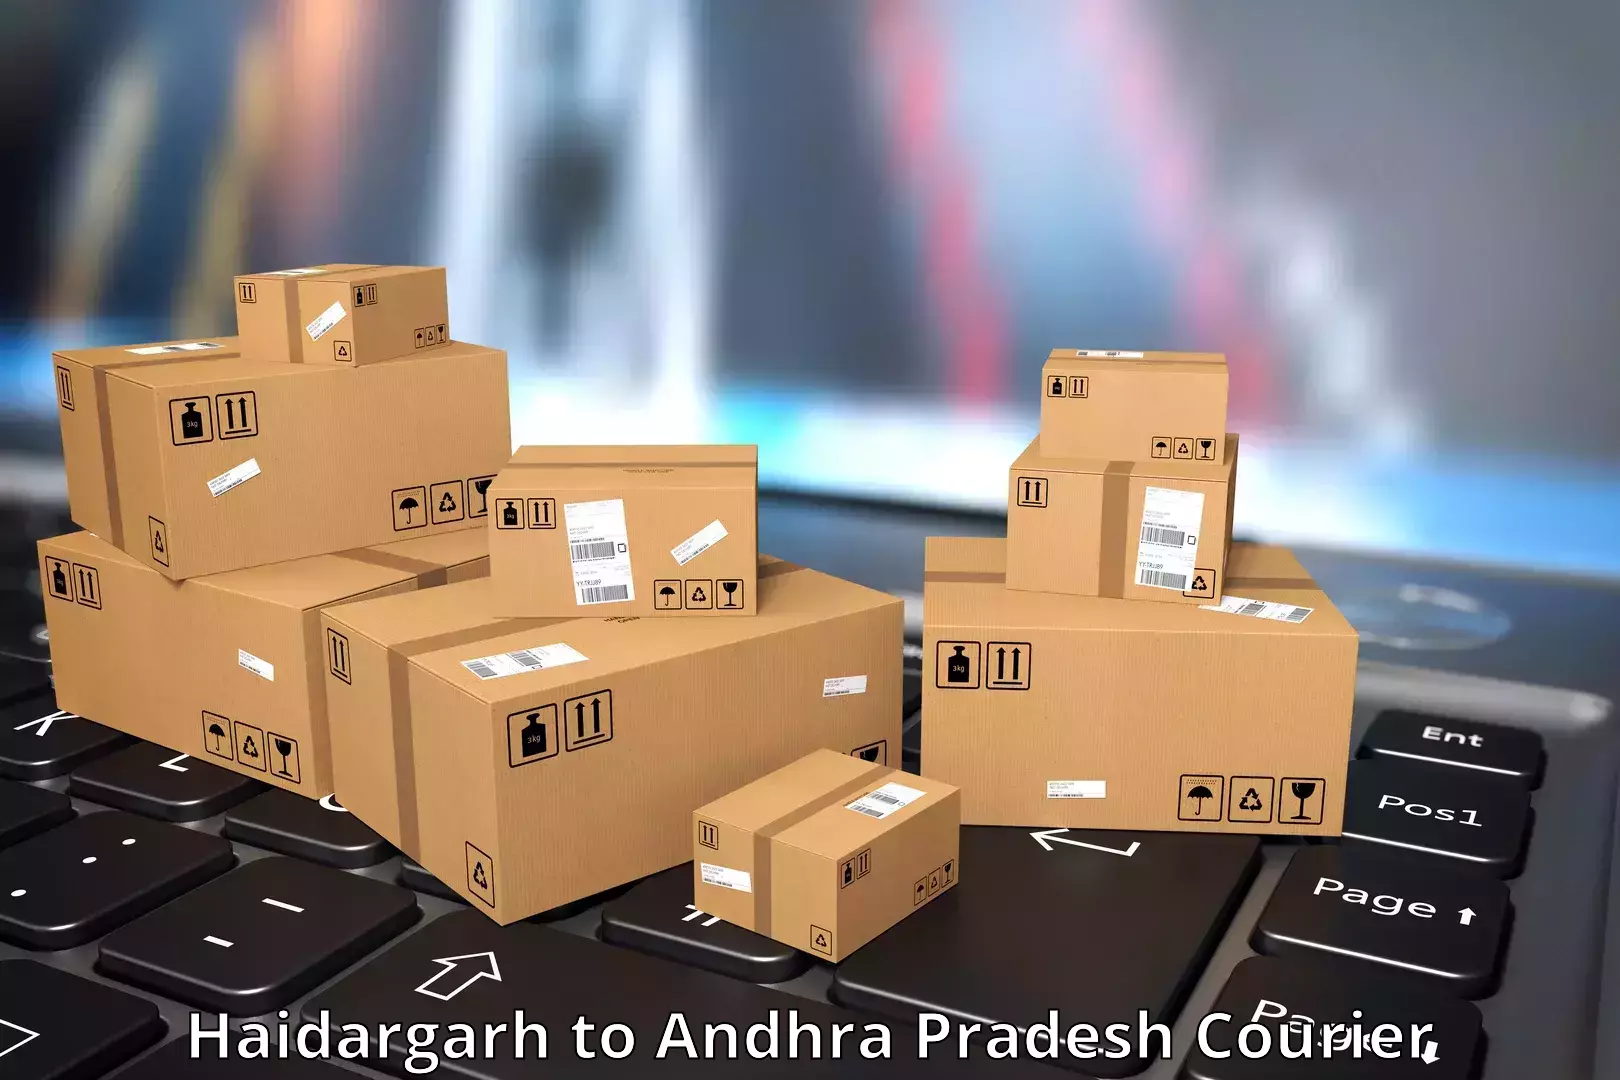 Courier service partnerships Haidargarh to Kondapi